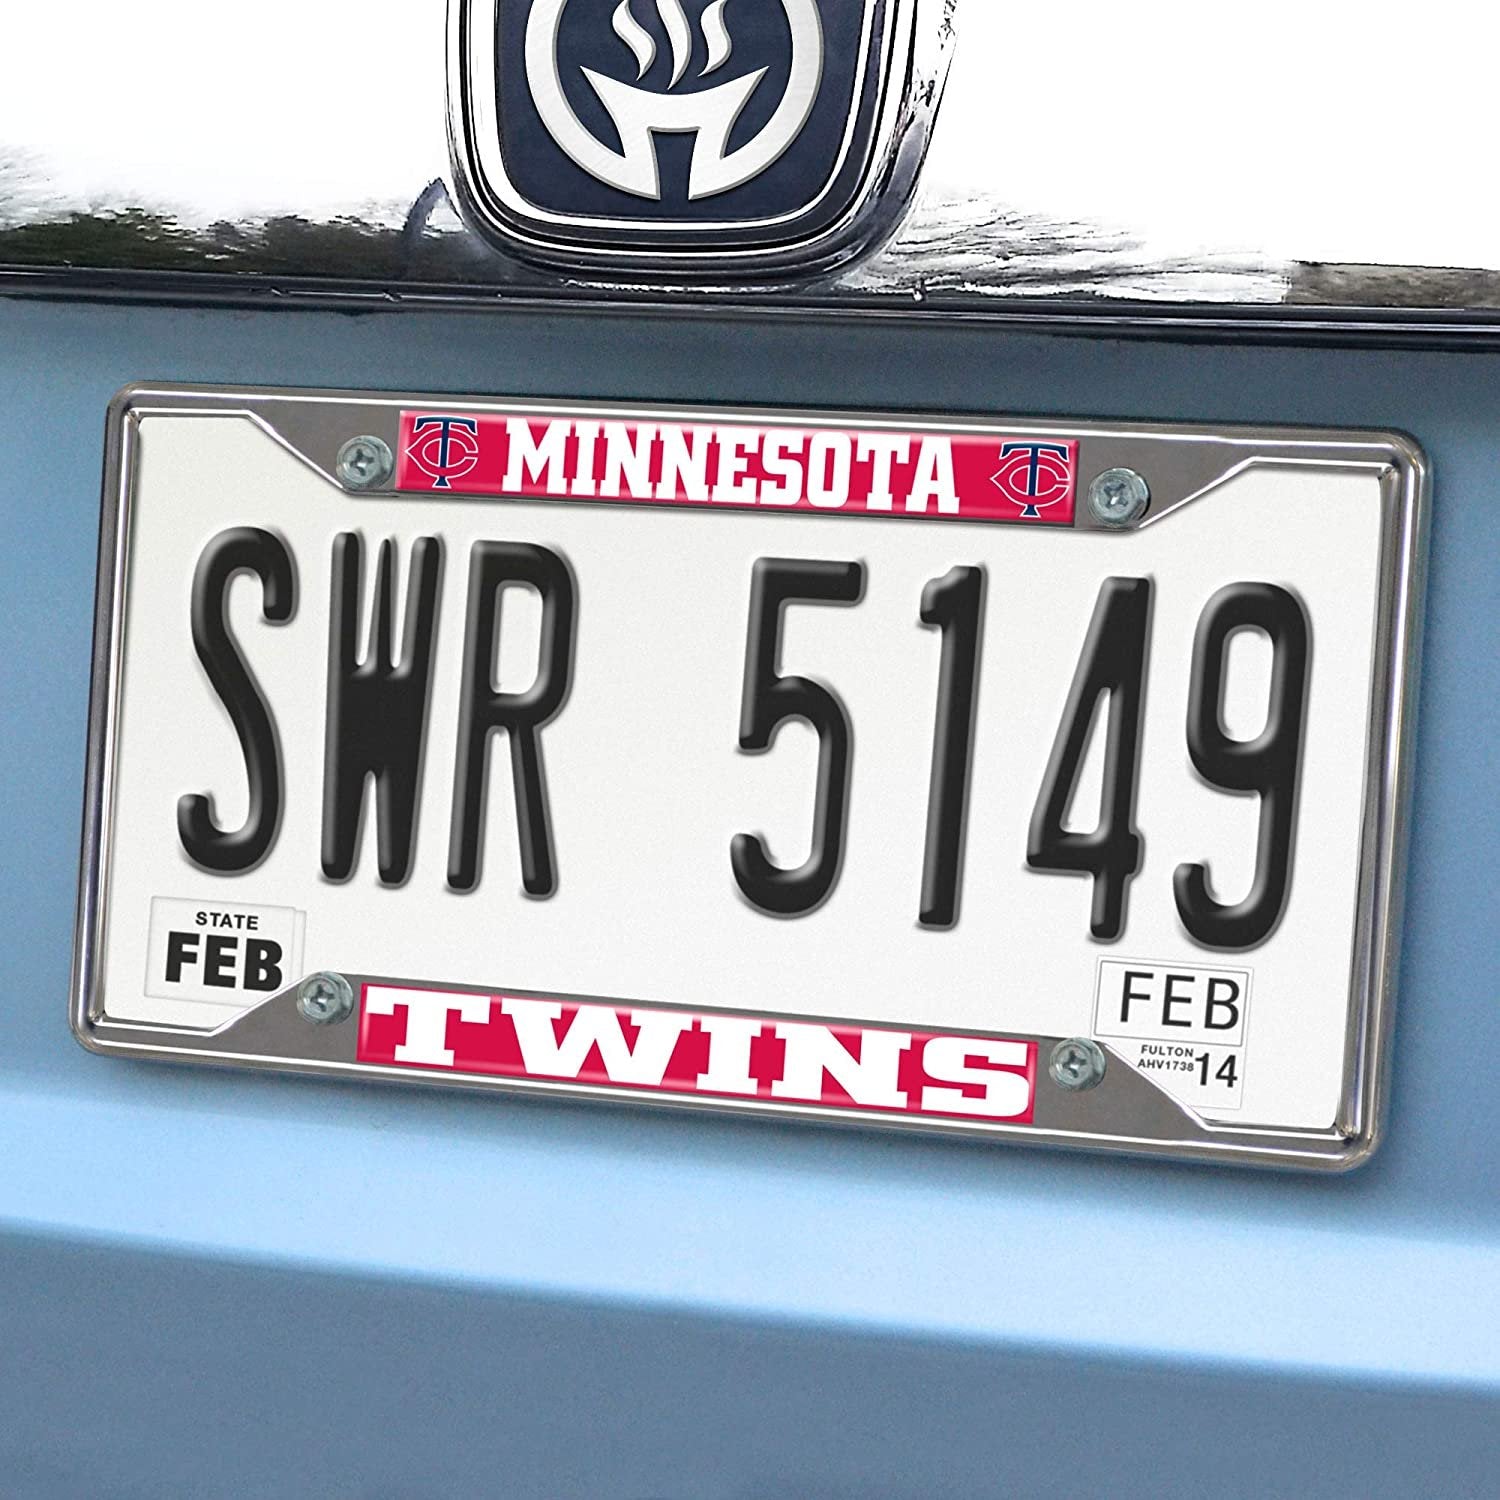 Minnesota Twins Metal License Plate Frame Tag Cover Chrome 6x12 Inch